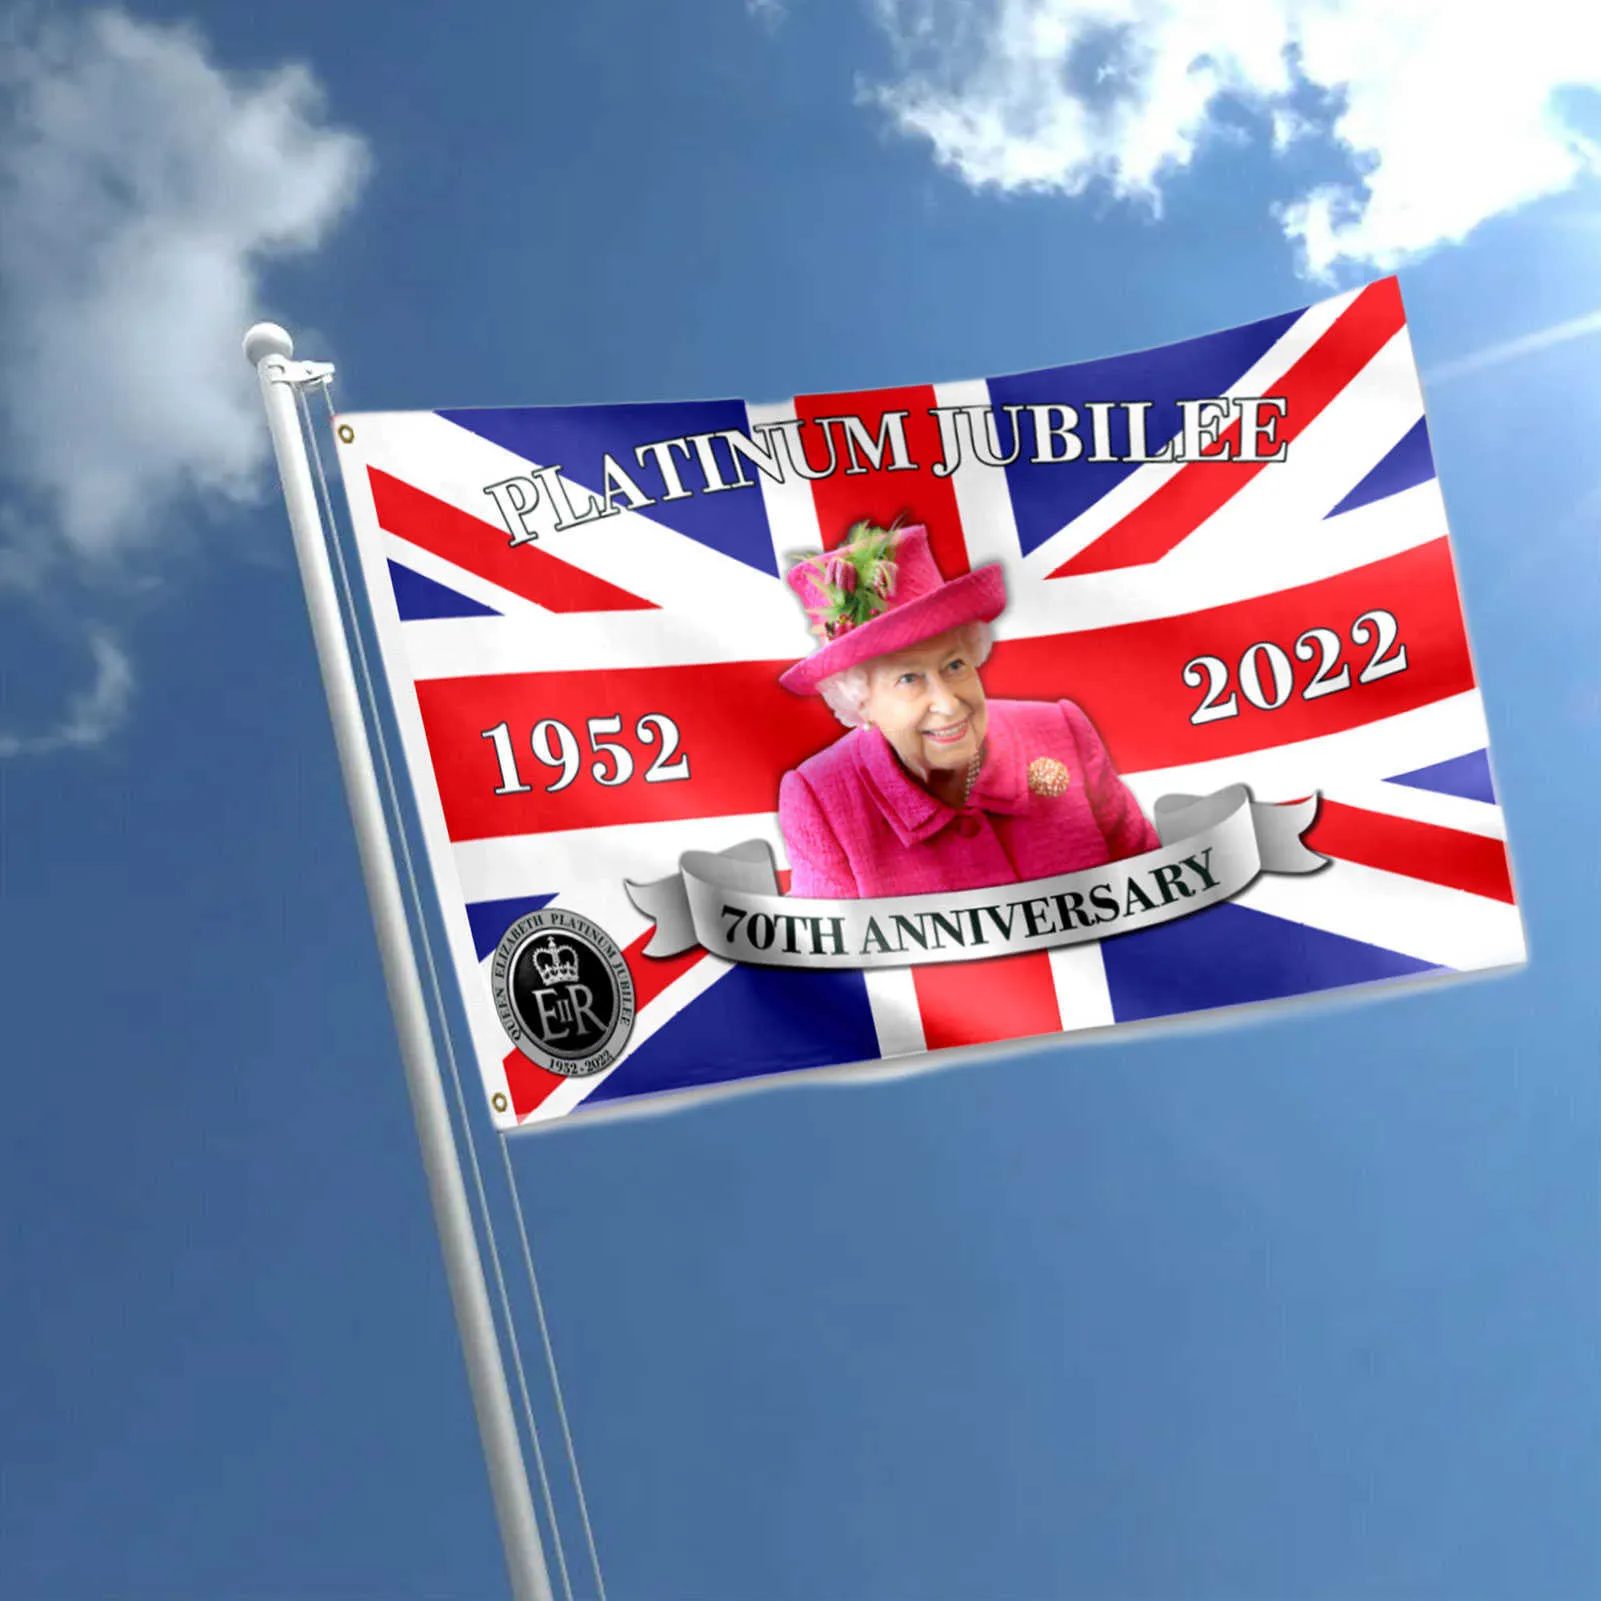 2022 Elizabeth II Platinums Jubilee Flag 3x5ft Union Jack Flag Con Sua Maestà La Regina Decorazione Souvenir Per Queen's